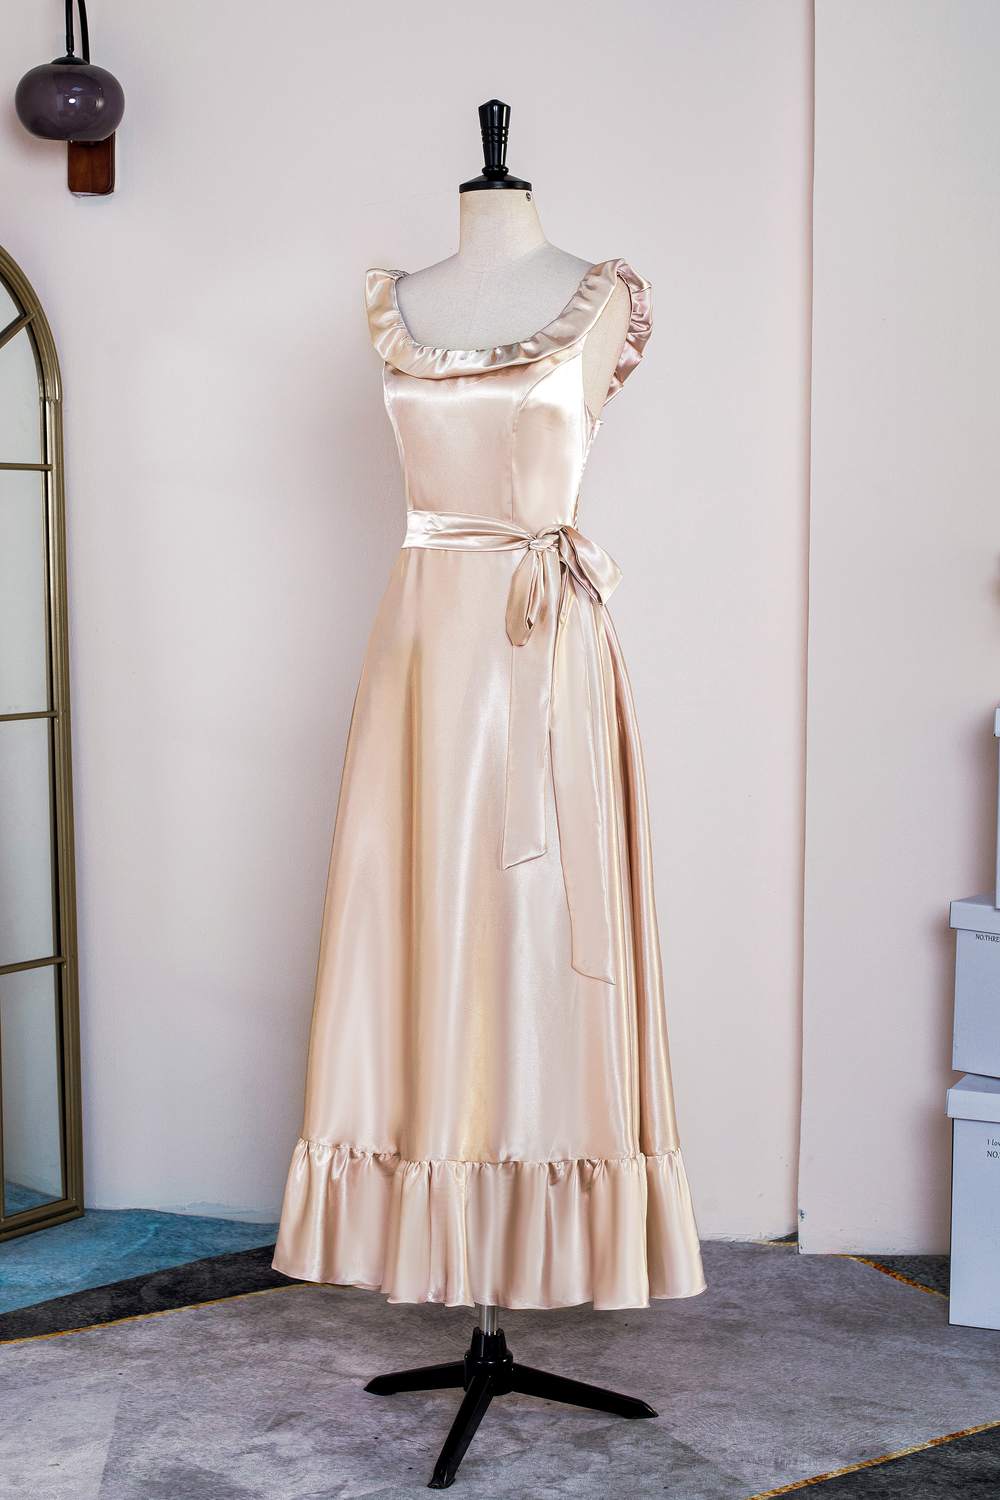 Champagne Sleeveless Ruffled A-line Tea-Length Bridesmaid Dress with Sash